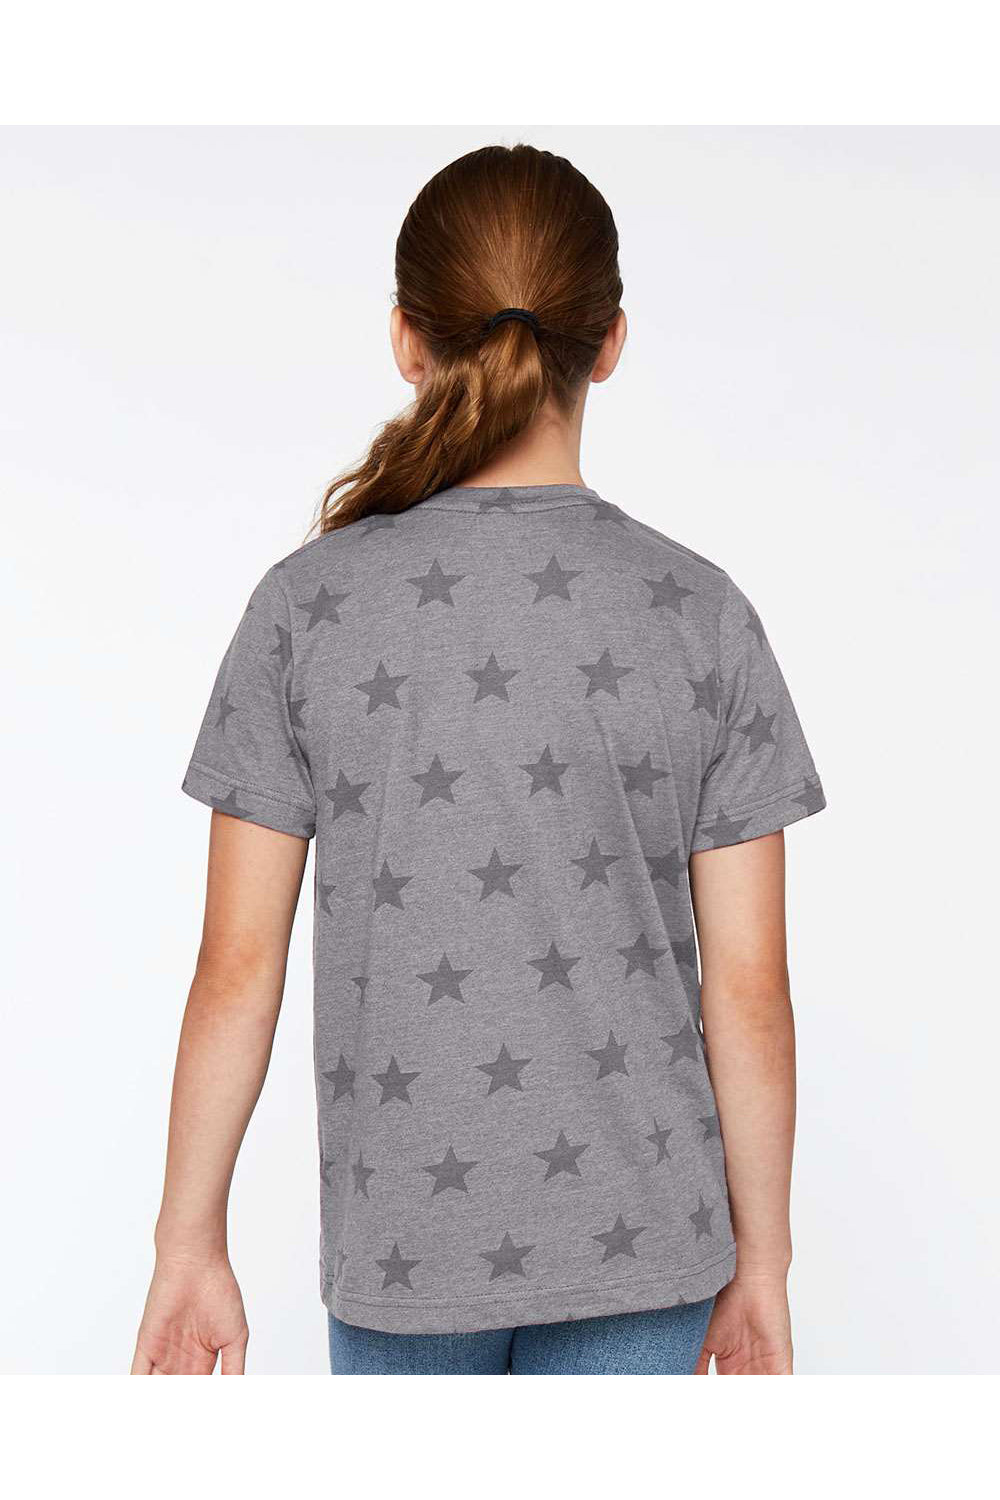 Code Five 2229 Youth Star Print Short Sleeve Crewneck T-Shirt Heather Granite Grey Model Back